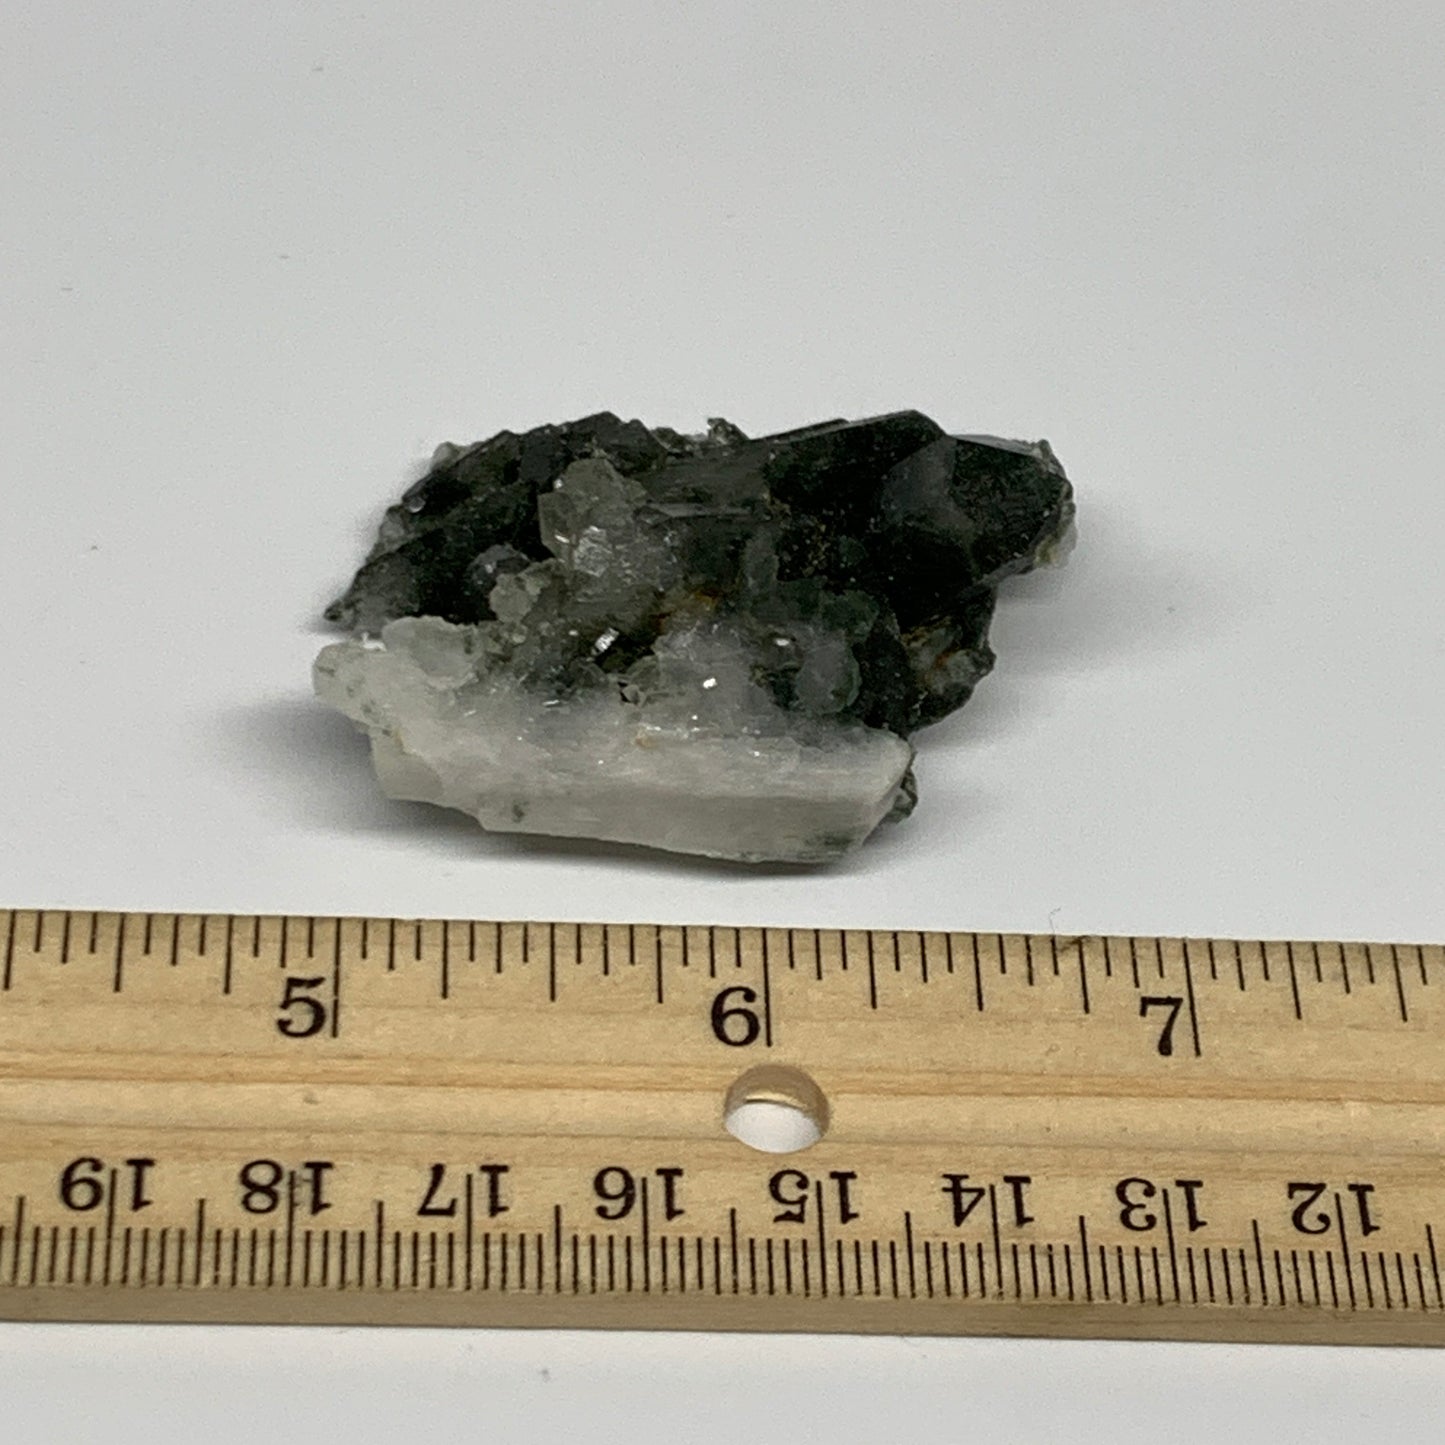 26.5g, 1.9"x1.4"x0.6", Chlorine Quartz Crystal Mineral,Specimen Terminated,B2773